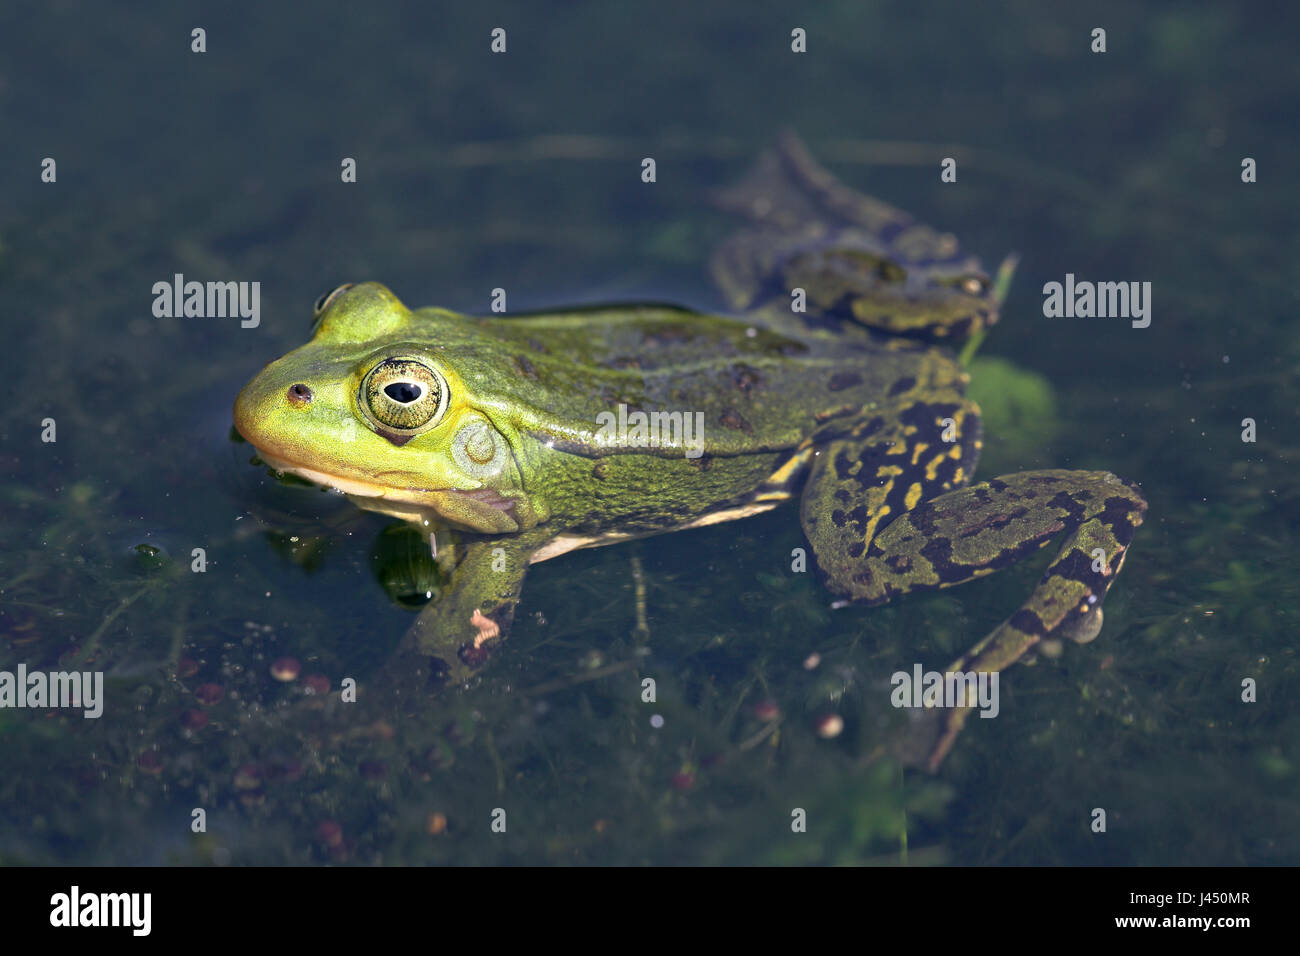 yellow male pool frog during breeding season Stock Photo